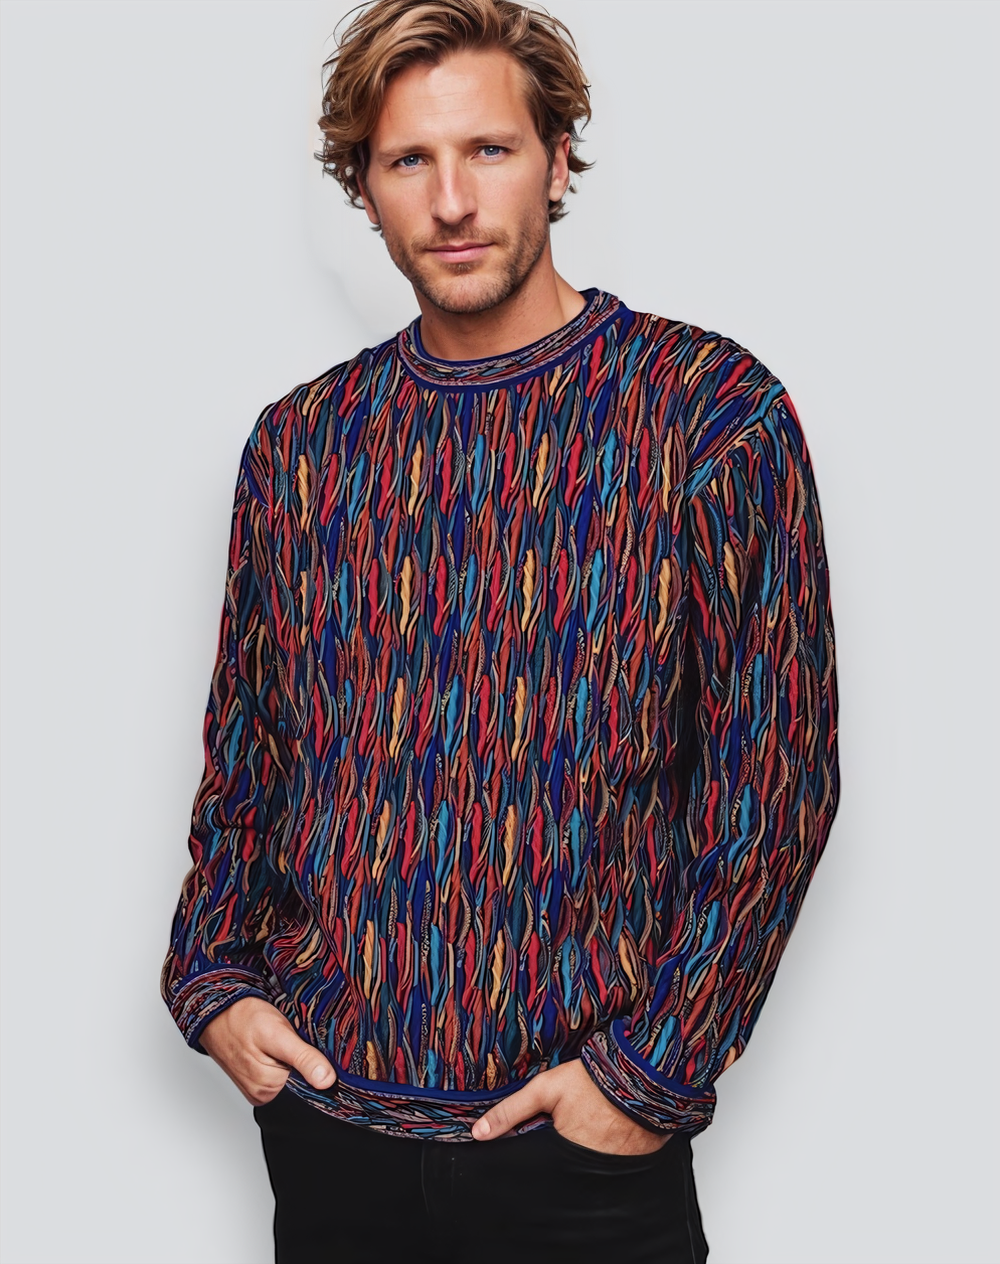 Wave - Bright Sweater Jumper Merino Wool 3D Geccu Knitwear